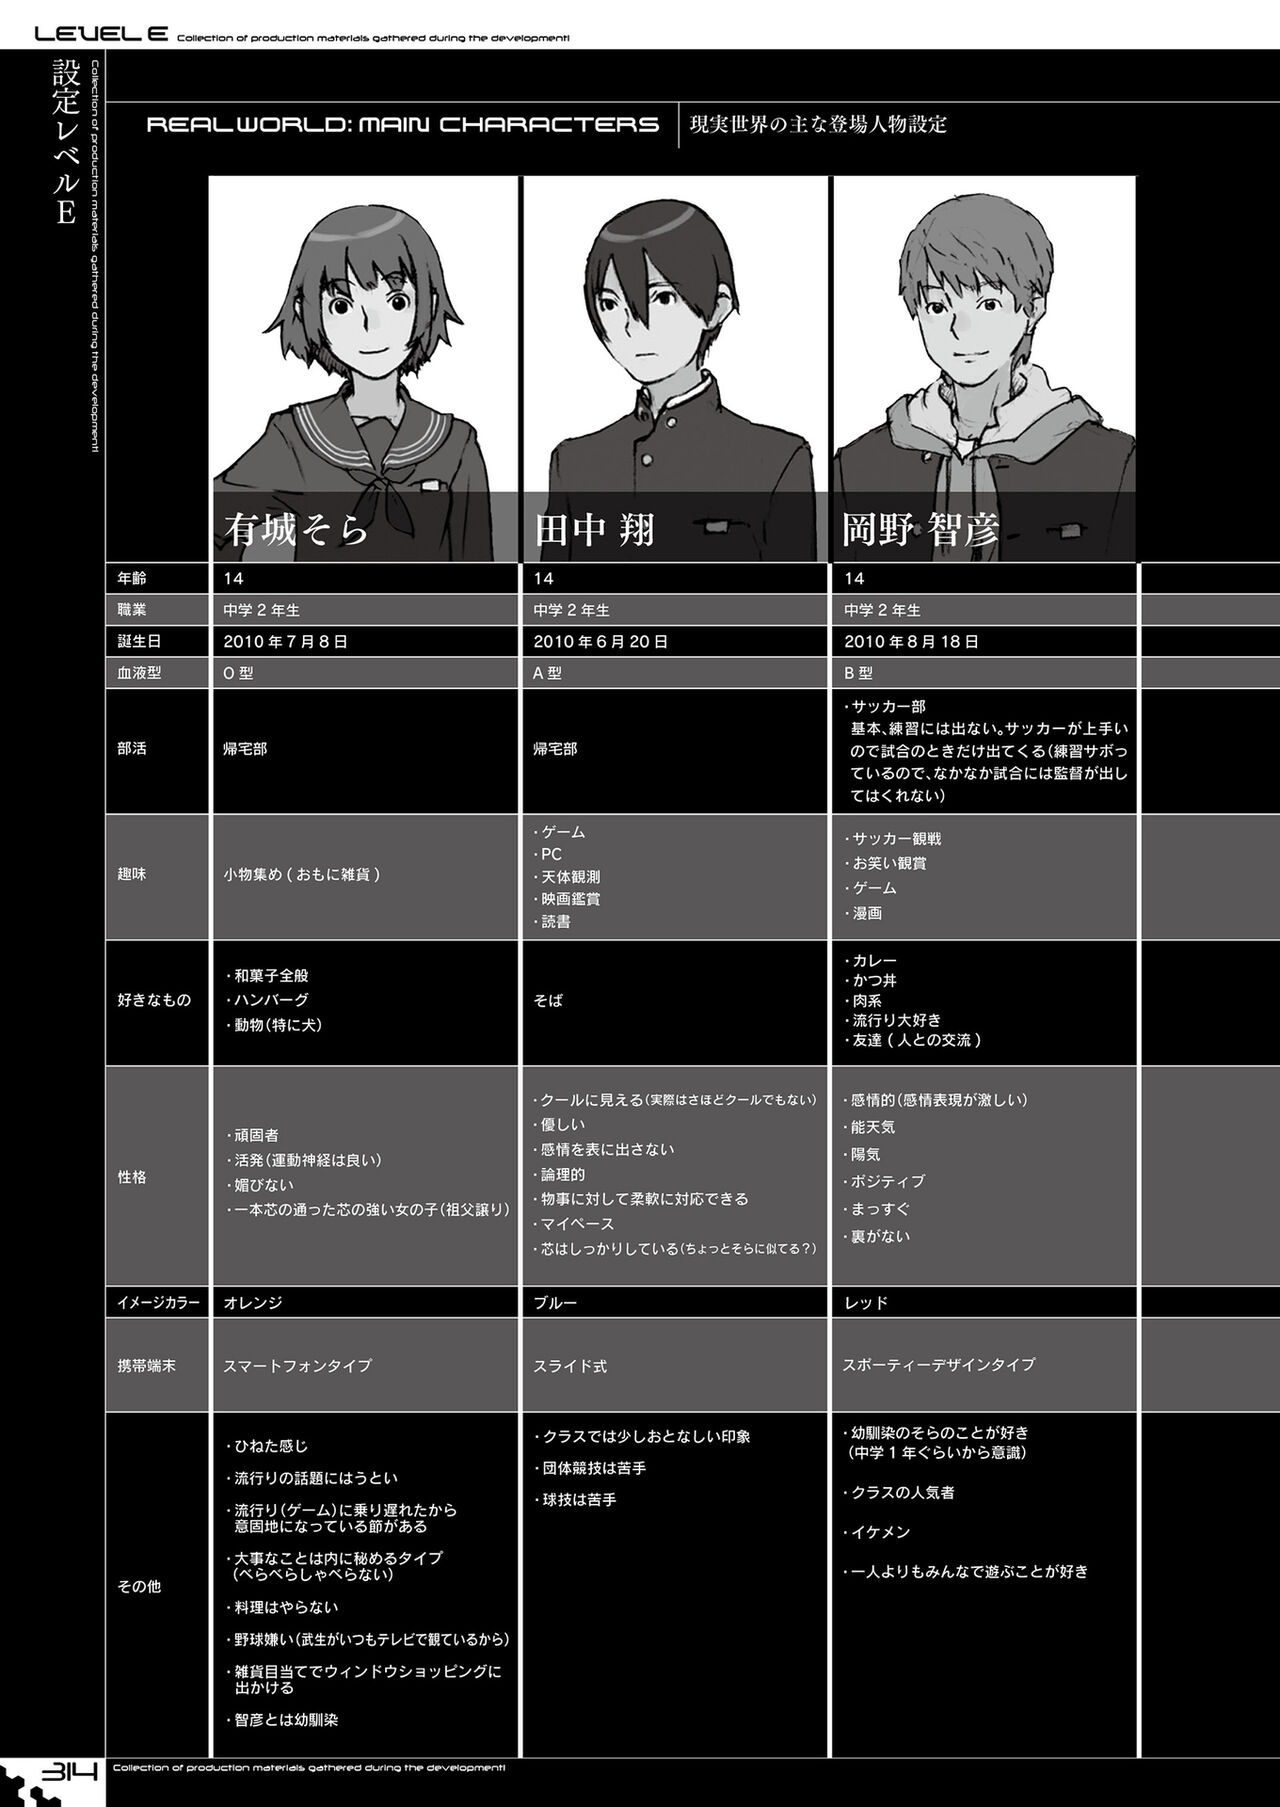 Dot Hack Sekai-no Muko ni  +Versus Complete Set  Documentation .hack //Archives _ 05 316